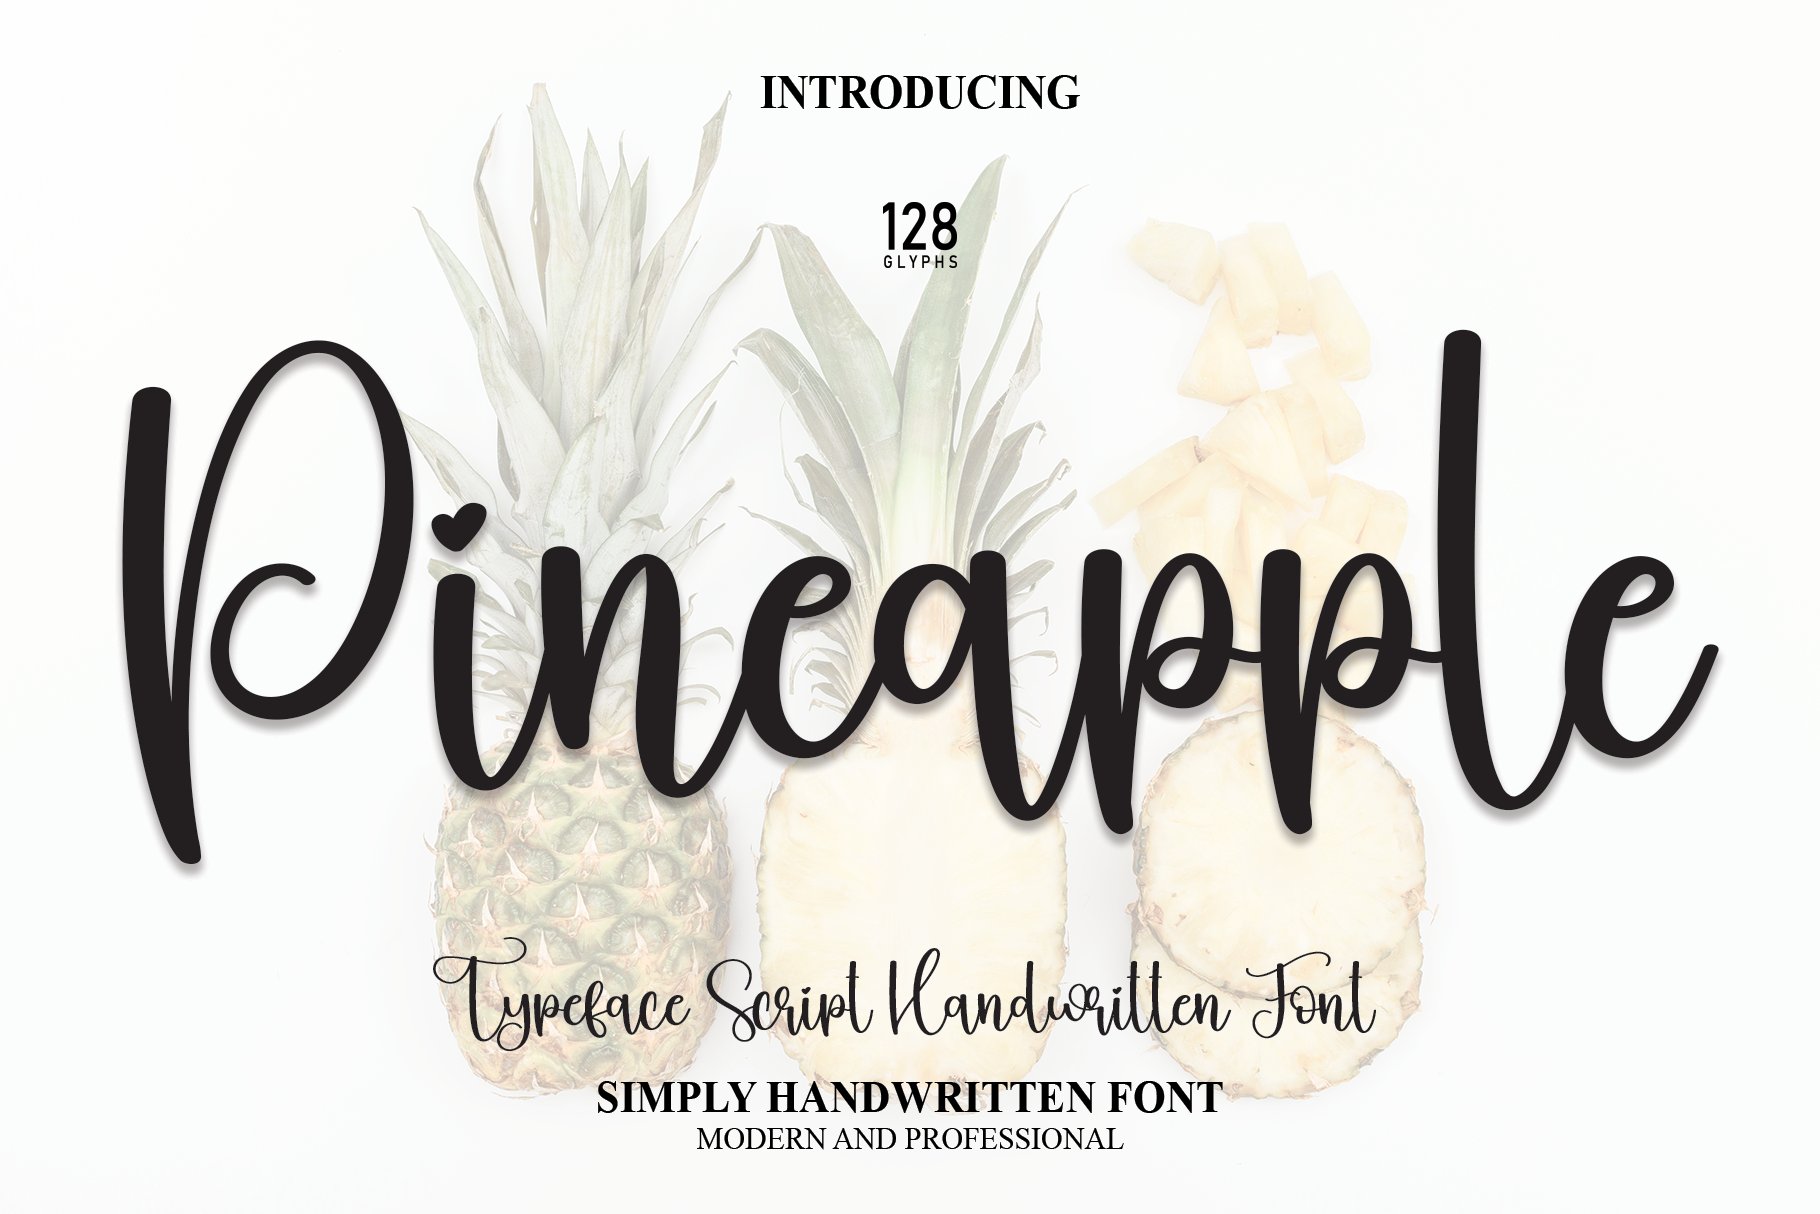 Pineapple | Script Font cover image.